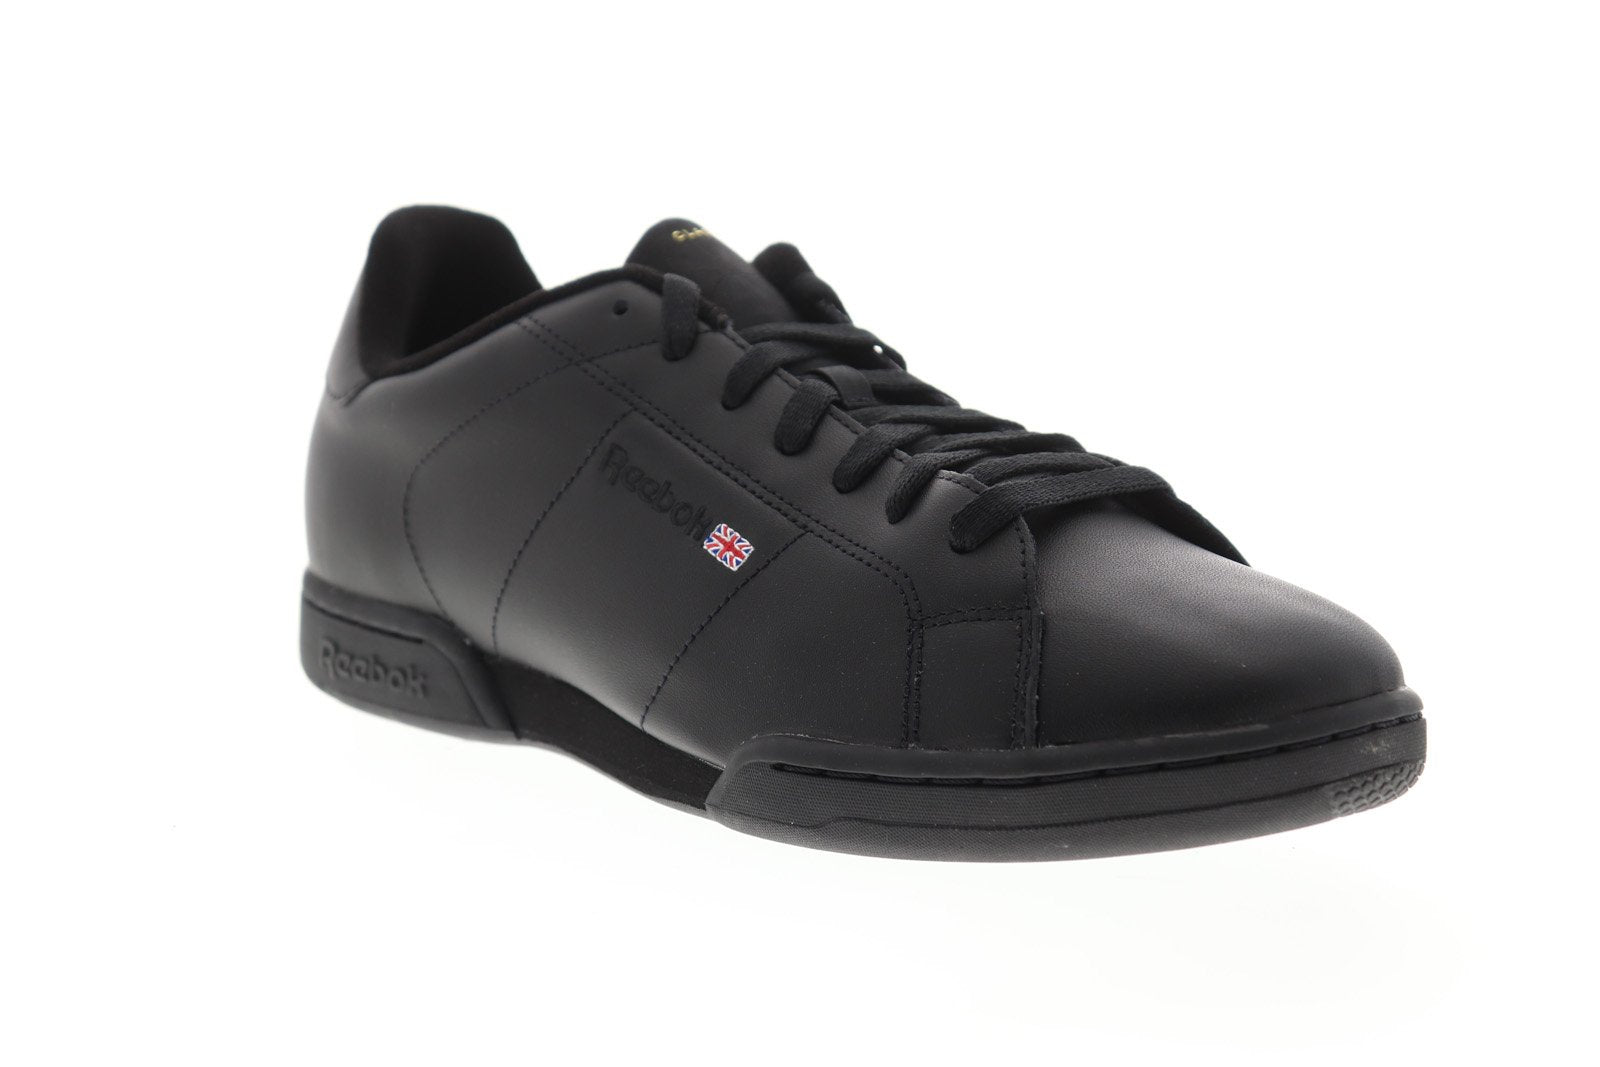 autopista Discrepancia arco Reebok Npc II 6836 Mens Black Leather Casual Low Top Lifestyle Sneaker -  Ruze Shoes